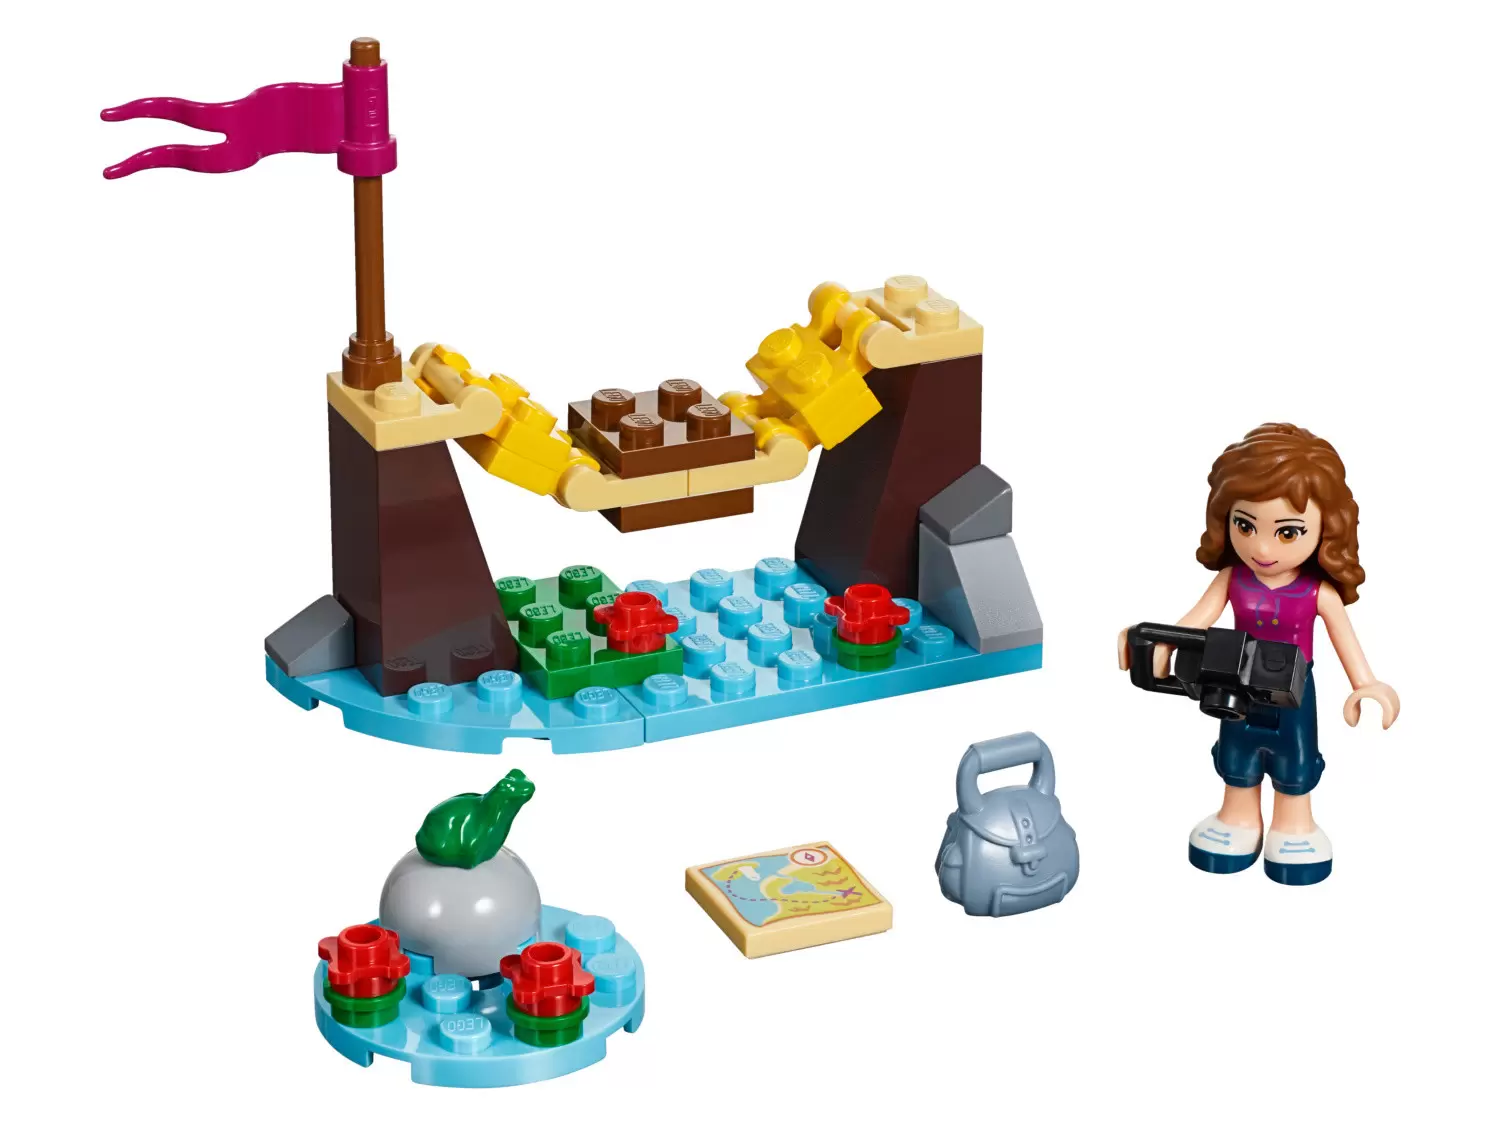 LEGO Friends - Adventure Camp Bridge